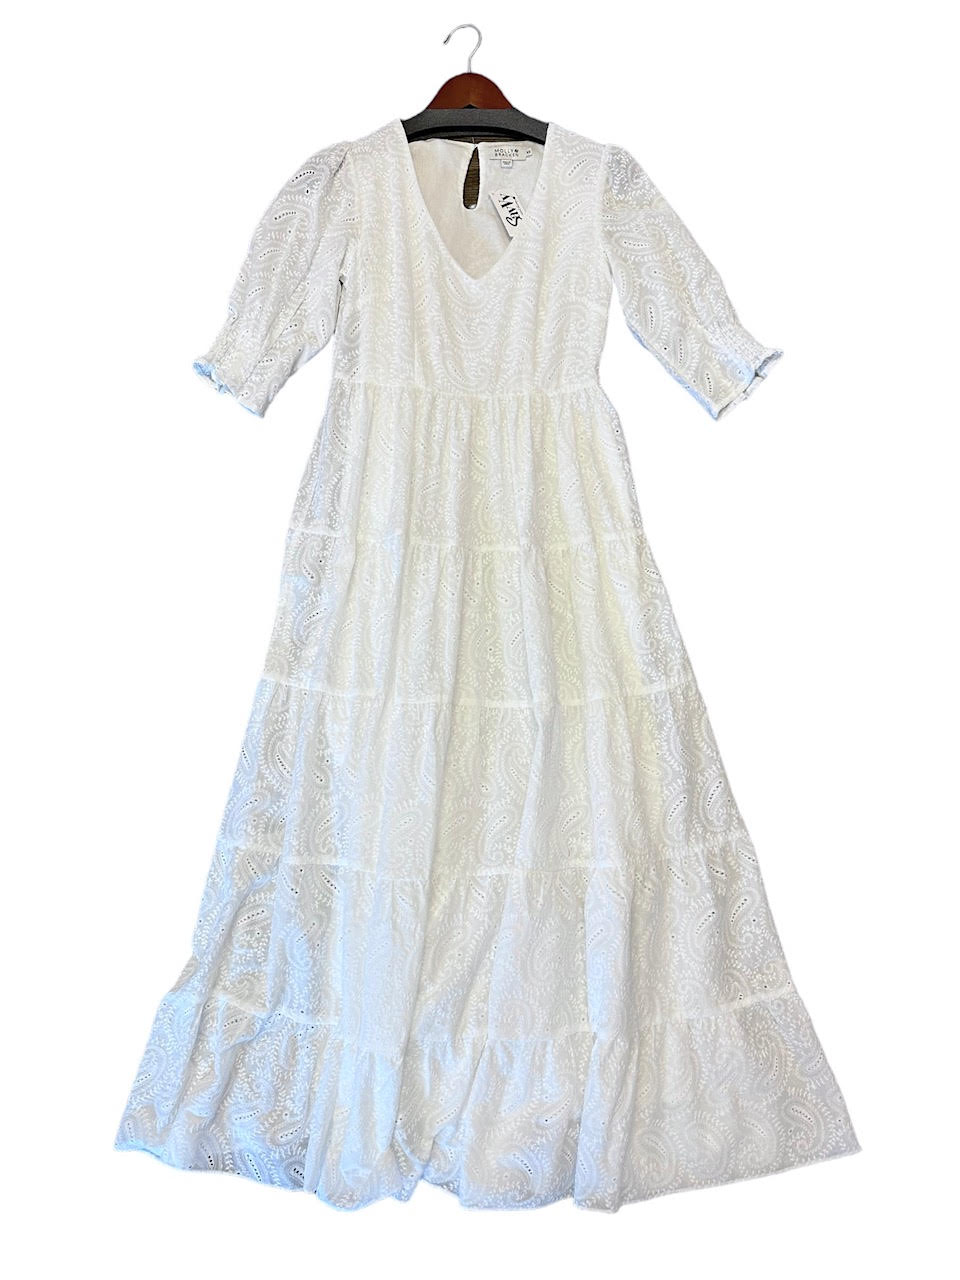 Elbow Sleeve Maxi Dress in white by Molly Bracken